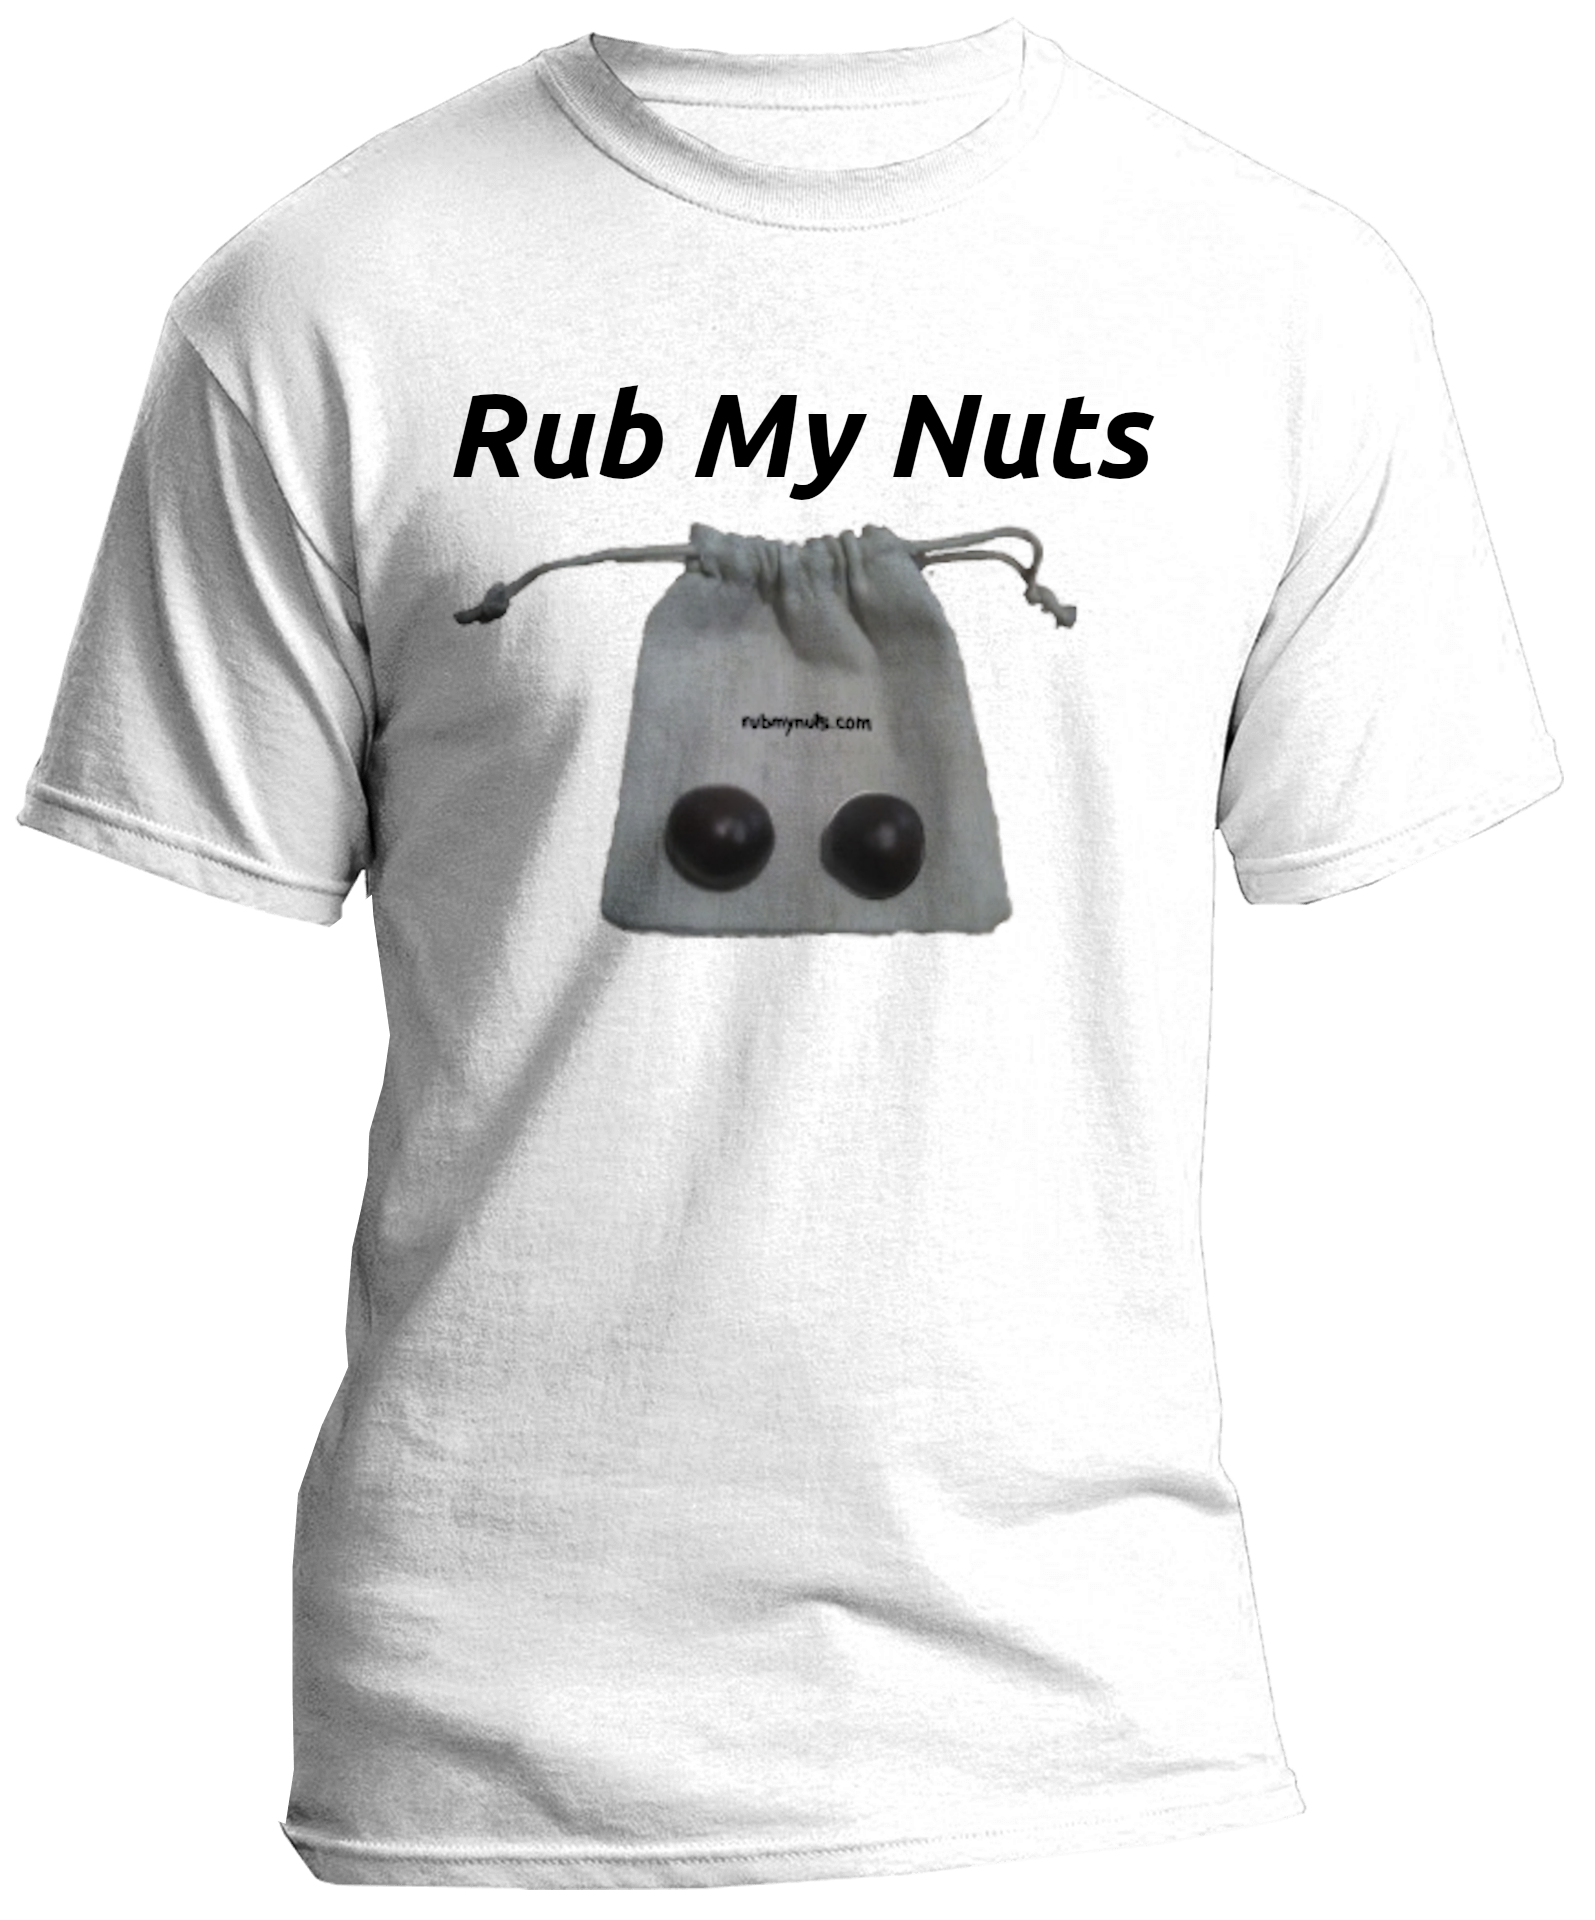 rub my nuts tee shirt